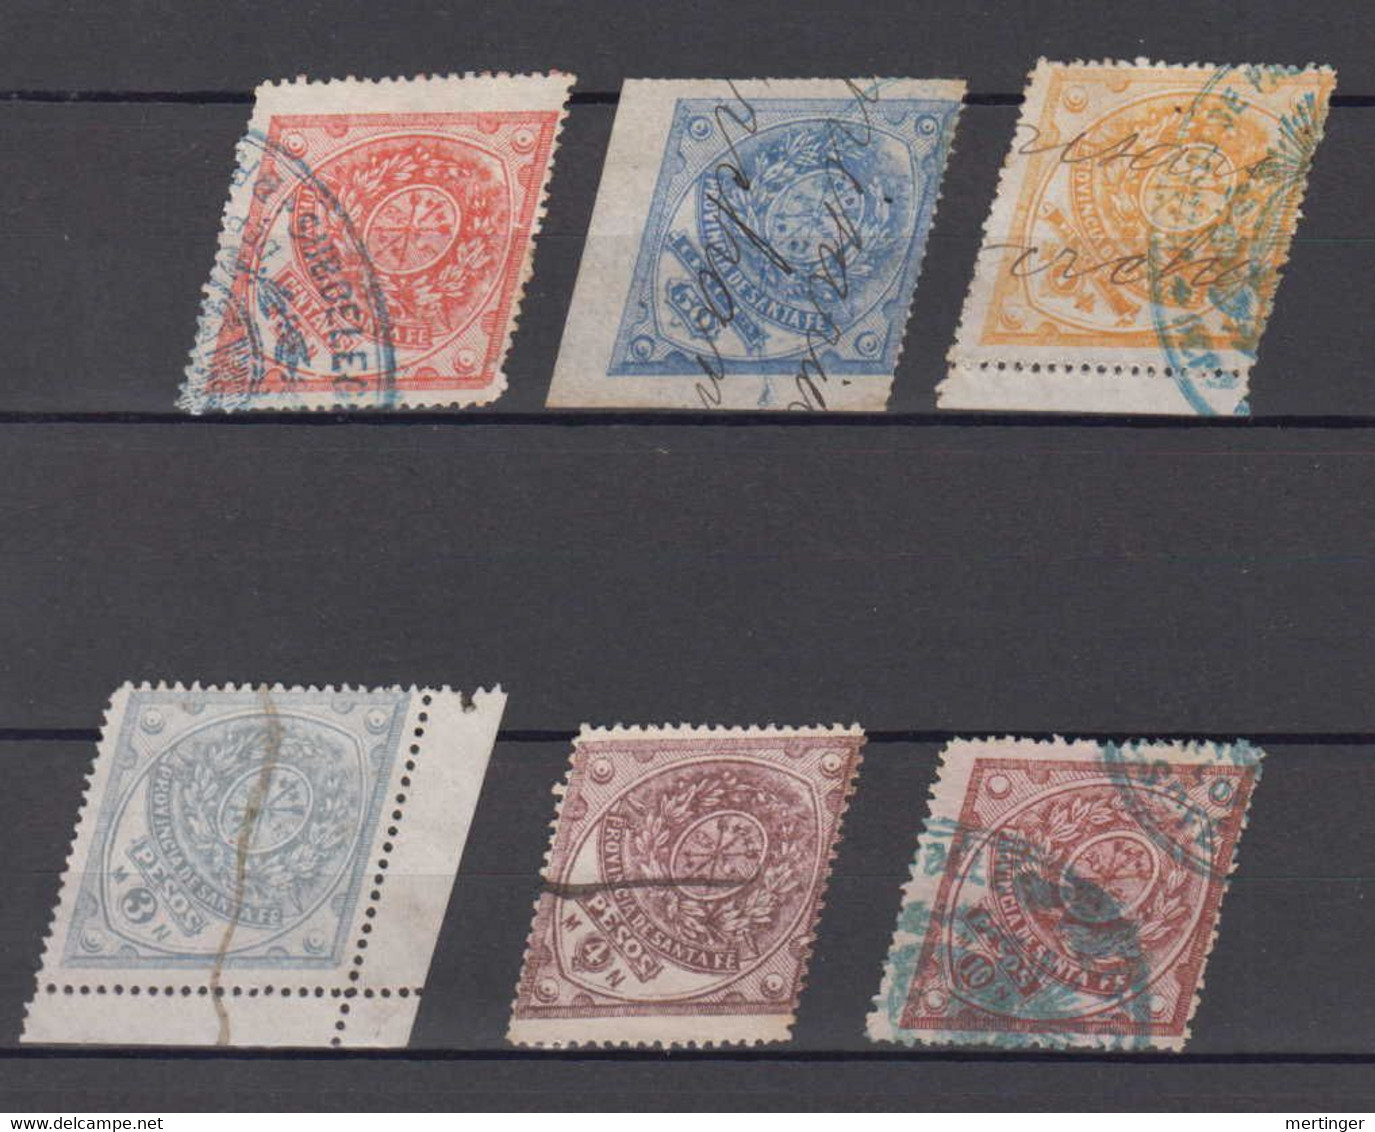 Argentina Santa Fe 6 Used Revenue Stamps Ca 1885 With Peso Values  Rhombus Perforation - Colecciones & Series